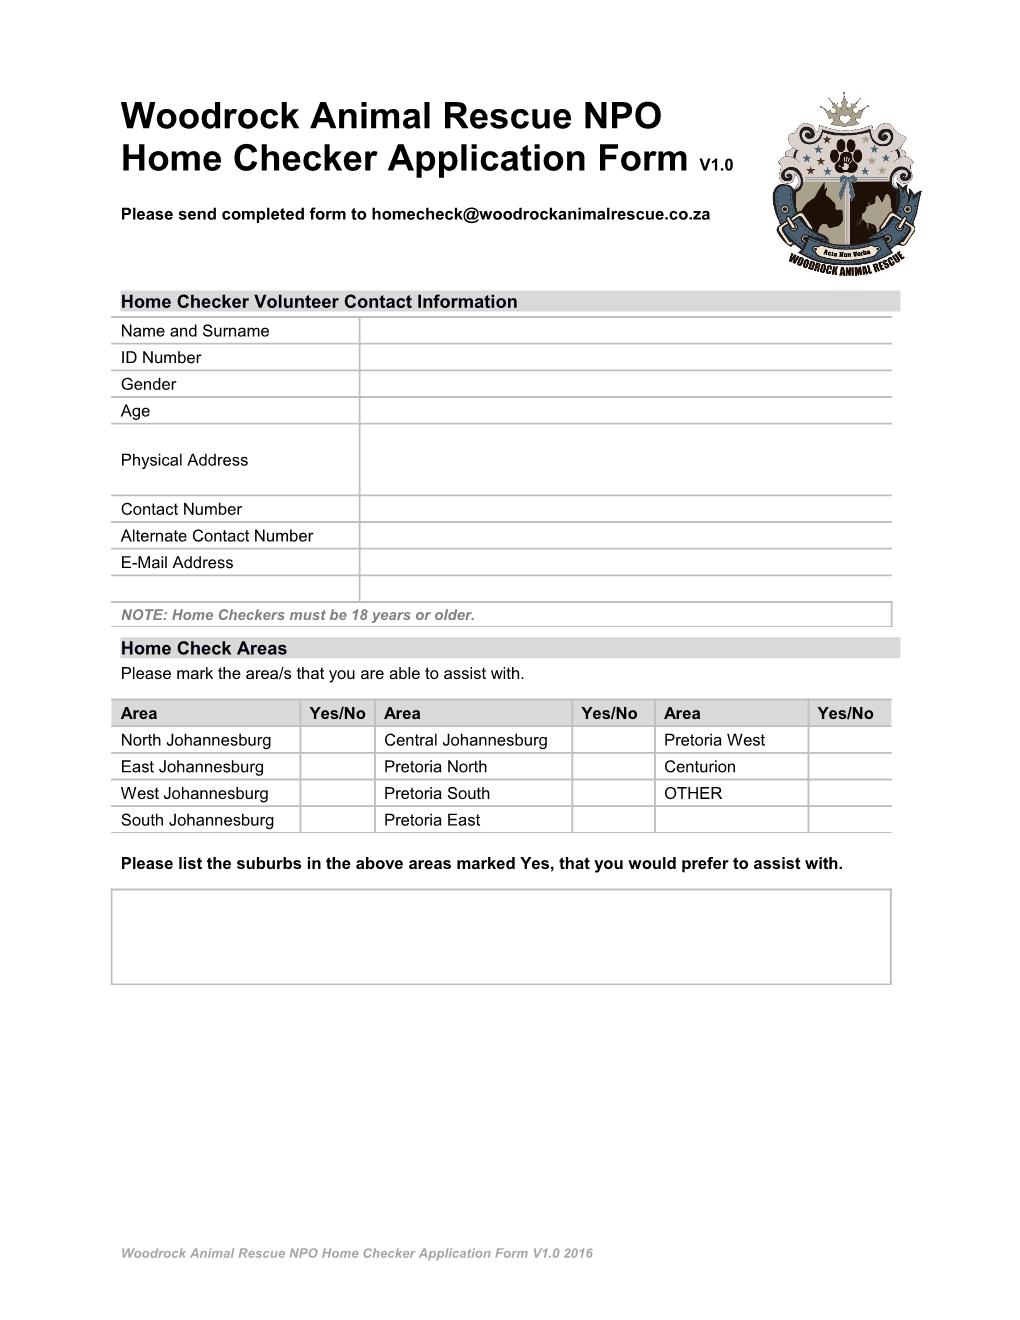 Home Checker Volunteer Contact Information